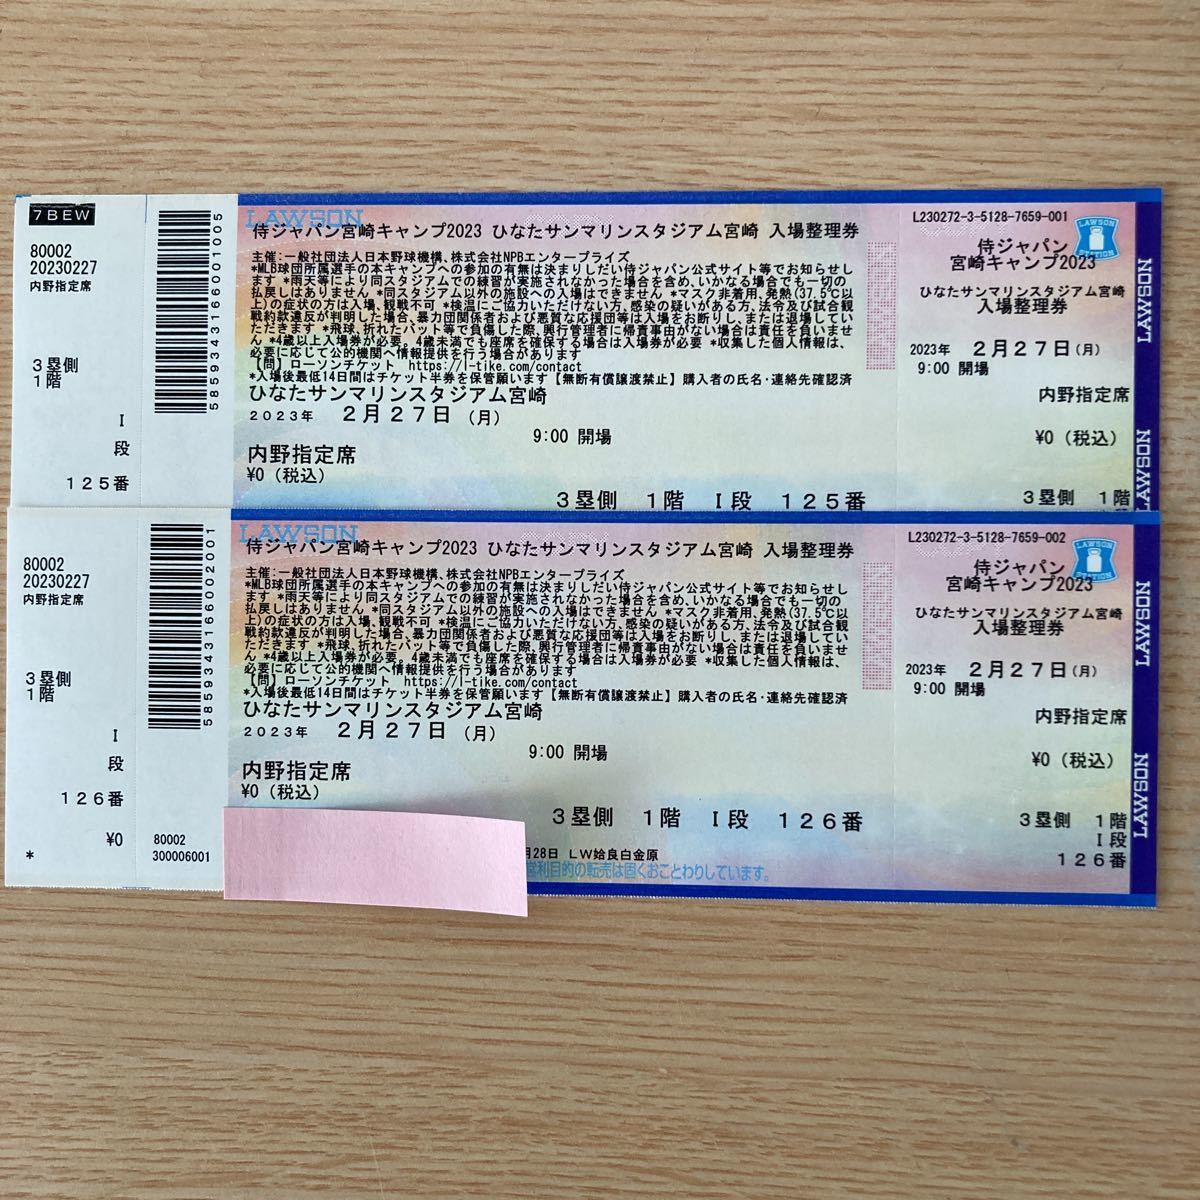  samurai Japan Miyazaki 2023. hatchet saury Lynn Stadium Miyazaki go in place order ticket 2 month 27 day inside . designation seat 